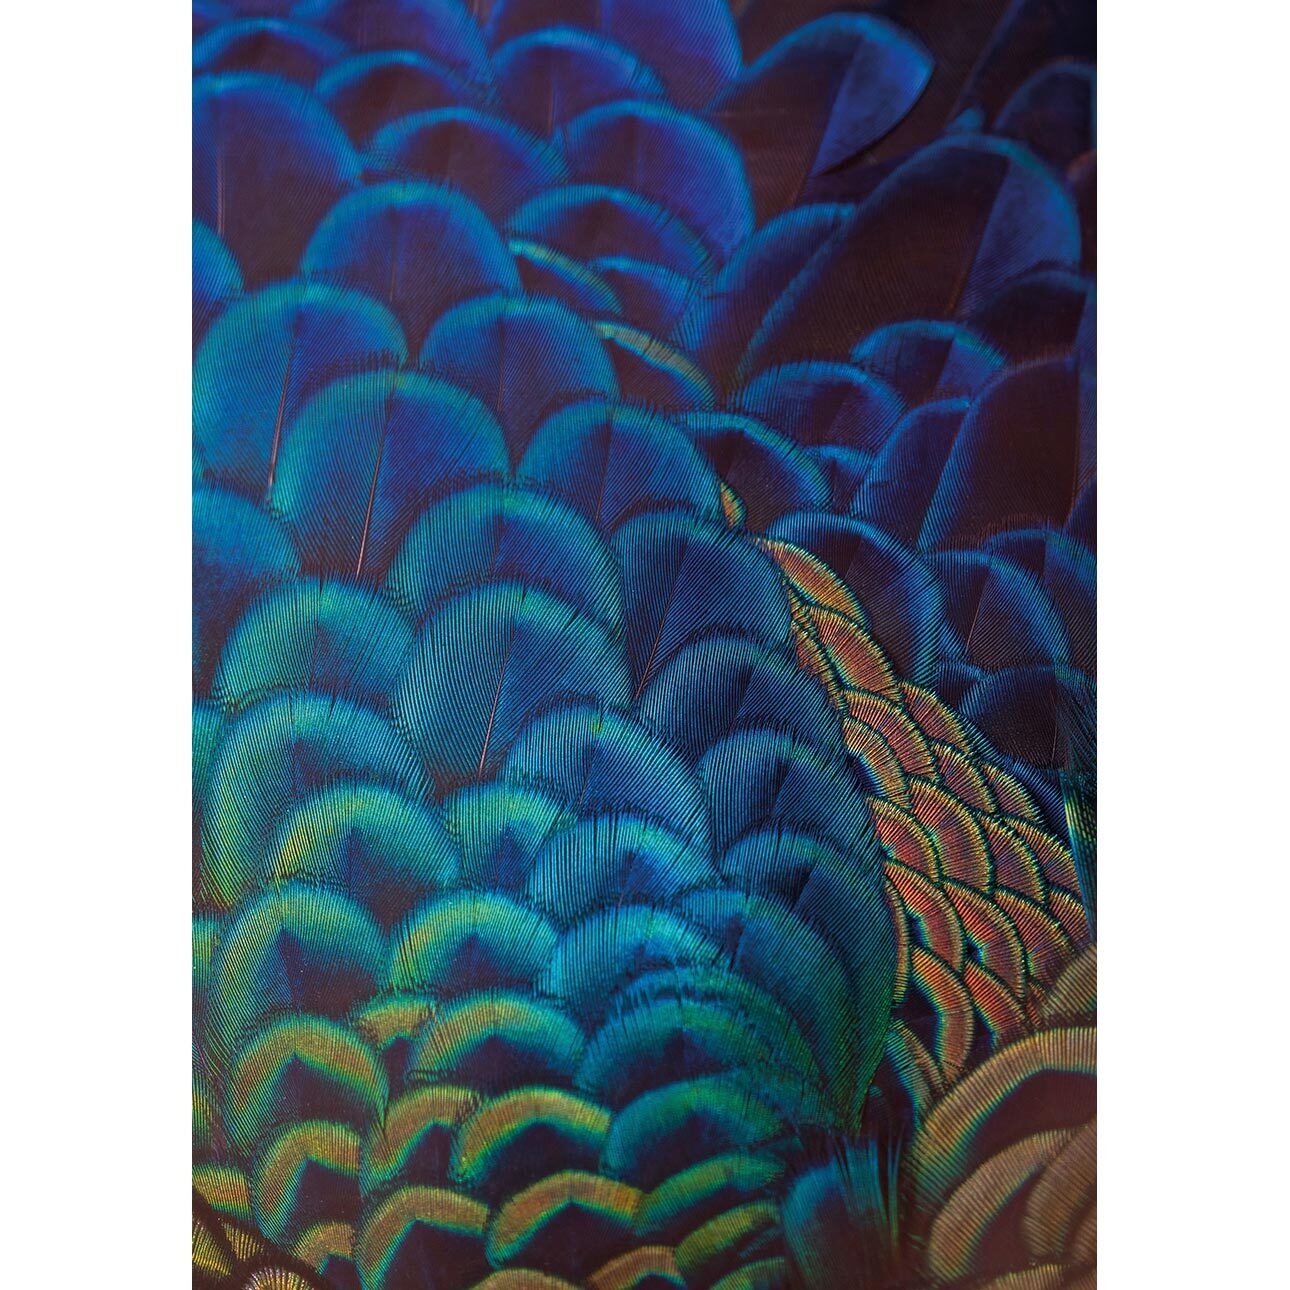 Leinwandbild Multicolor Feathers, 70 x 100 cm günstig online kaufen